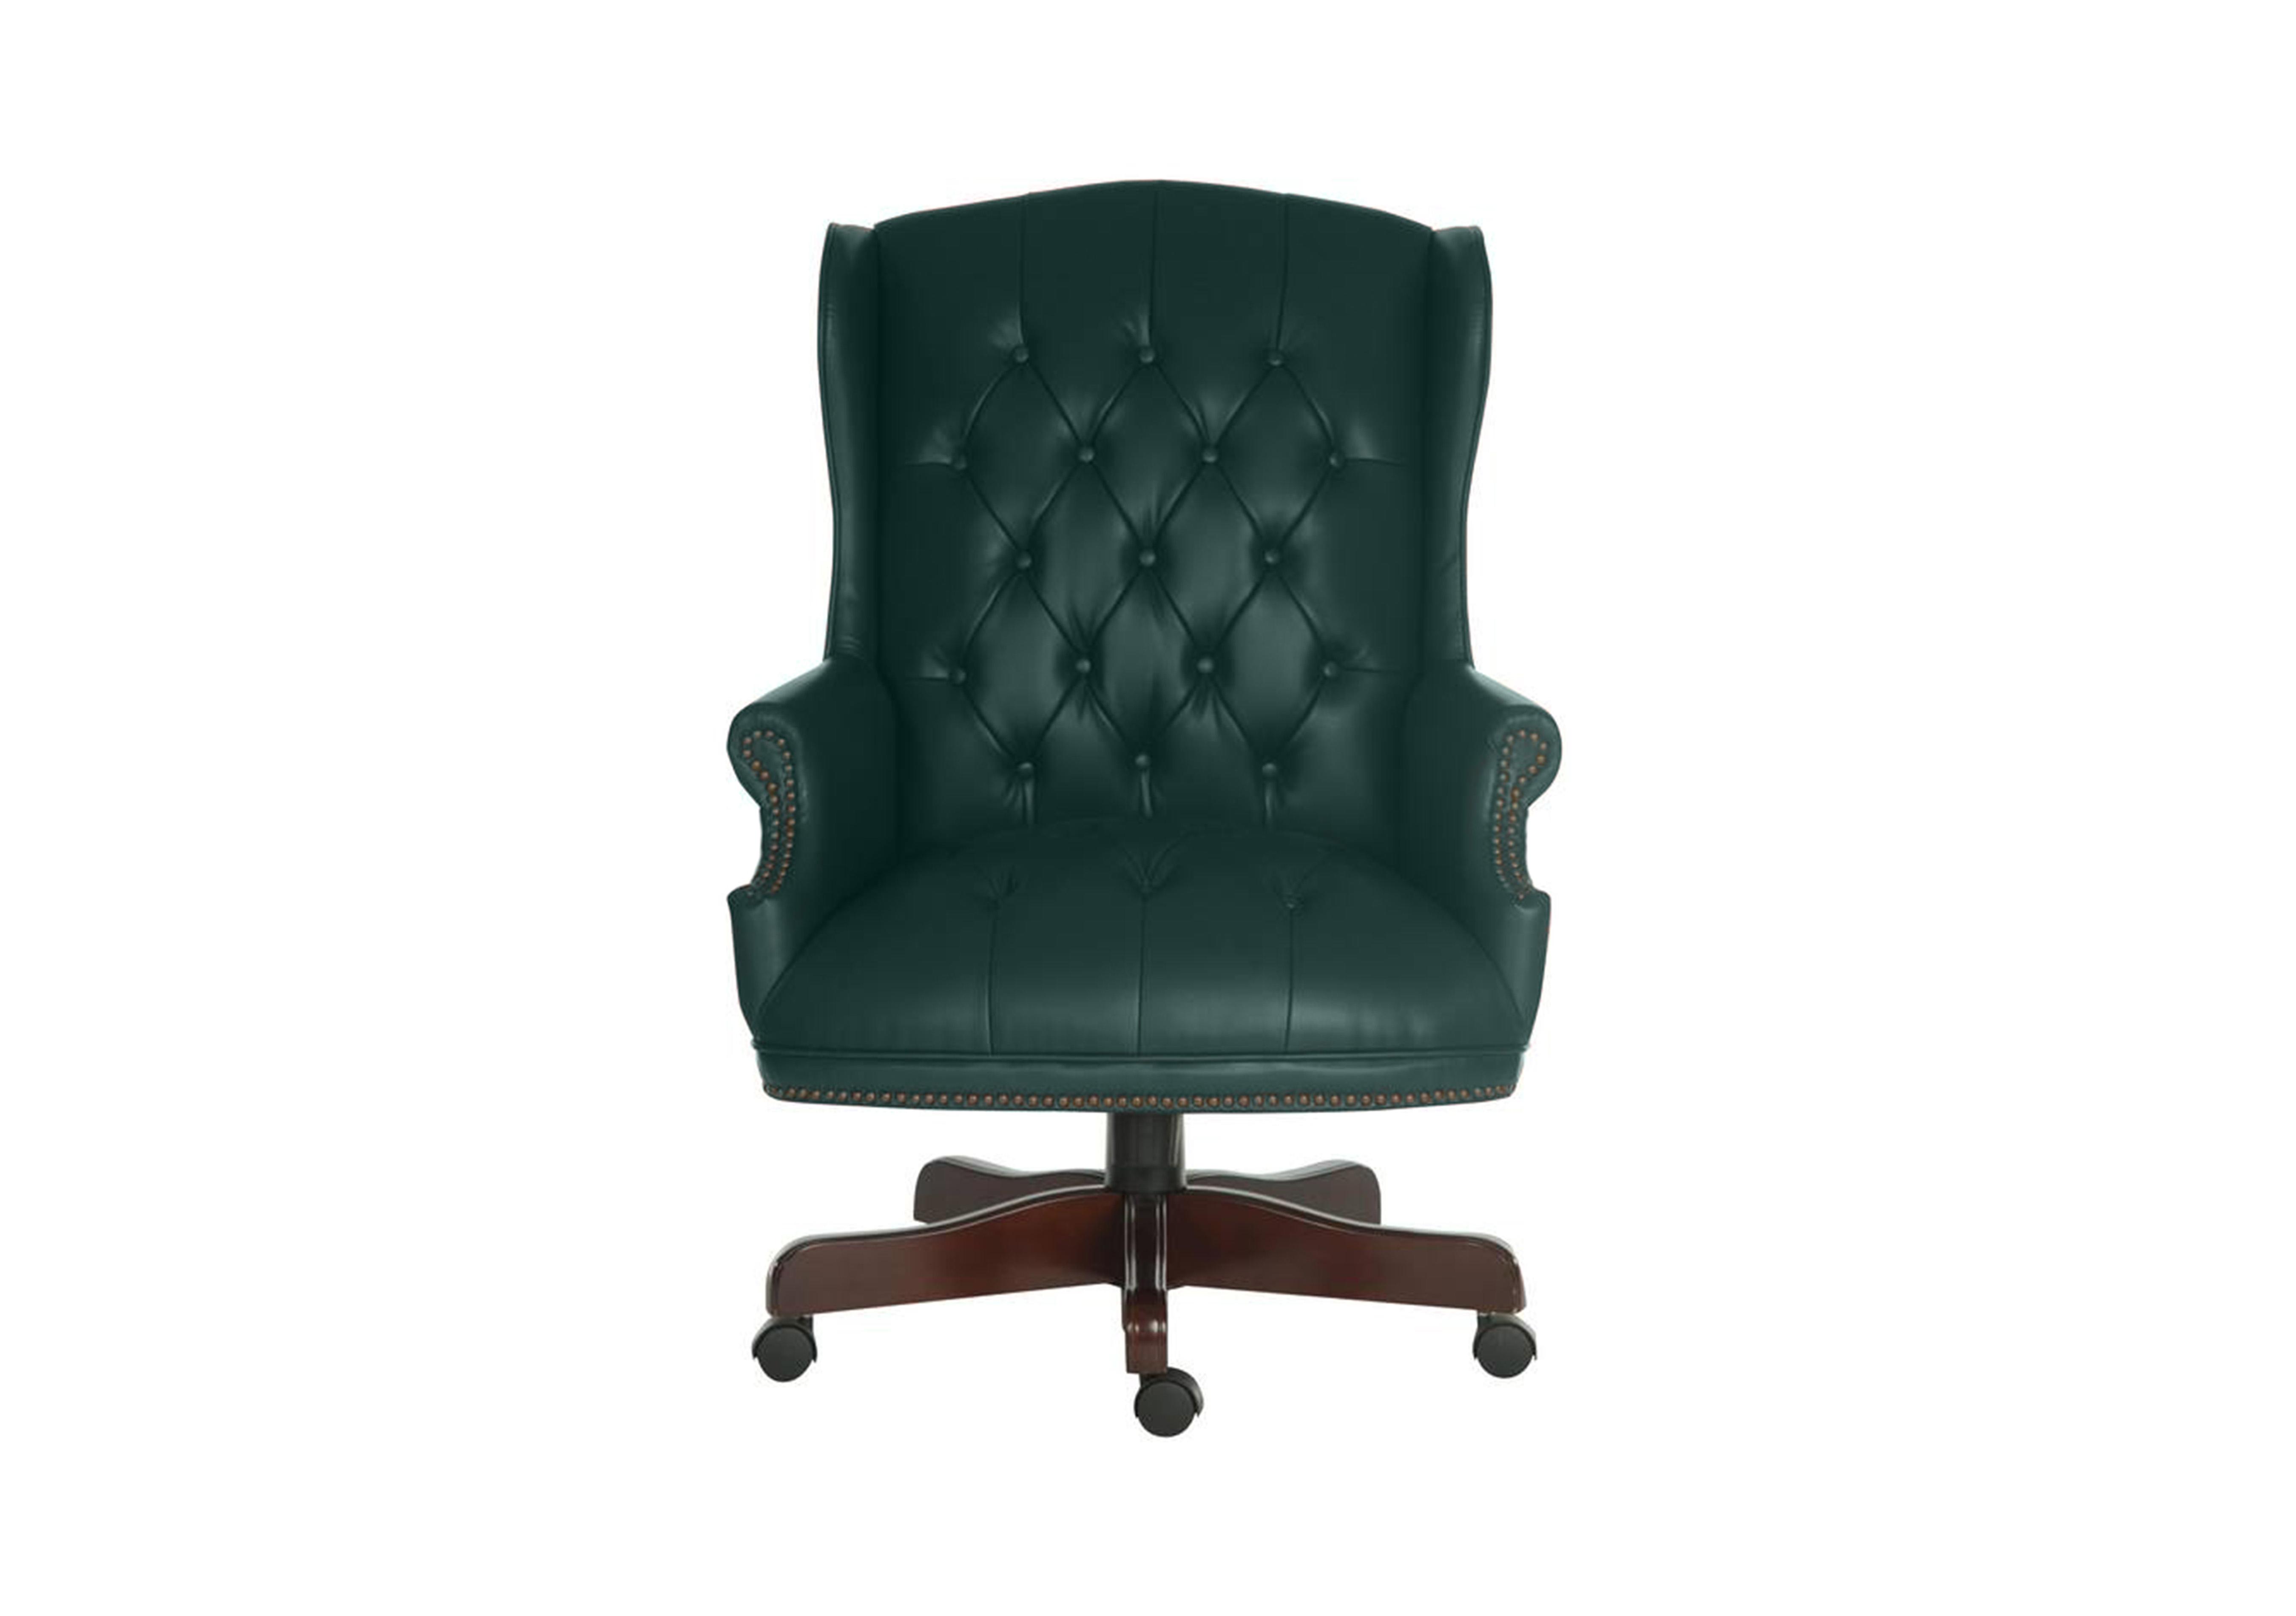 East River Chairman Chair in Green Dark Feet on Furniture Village